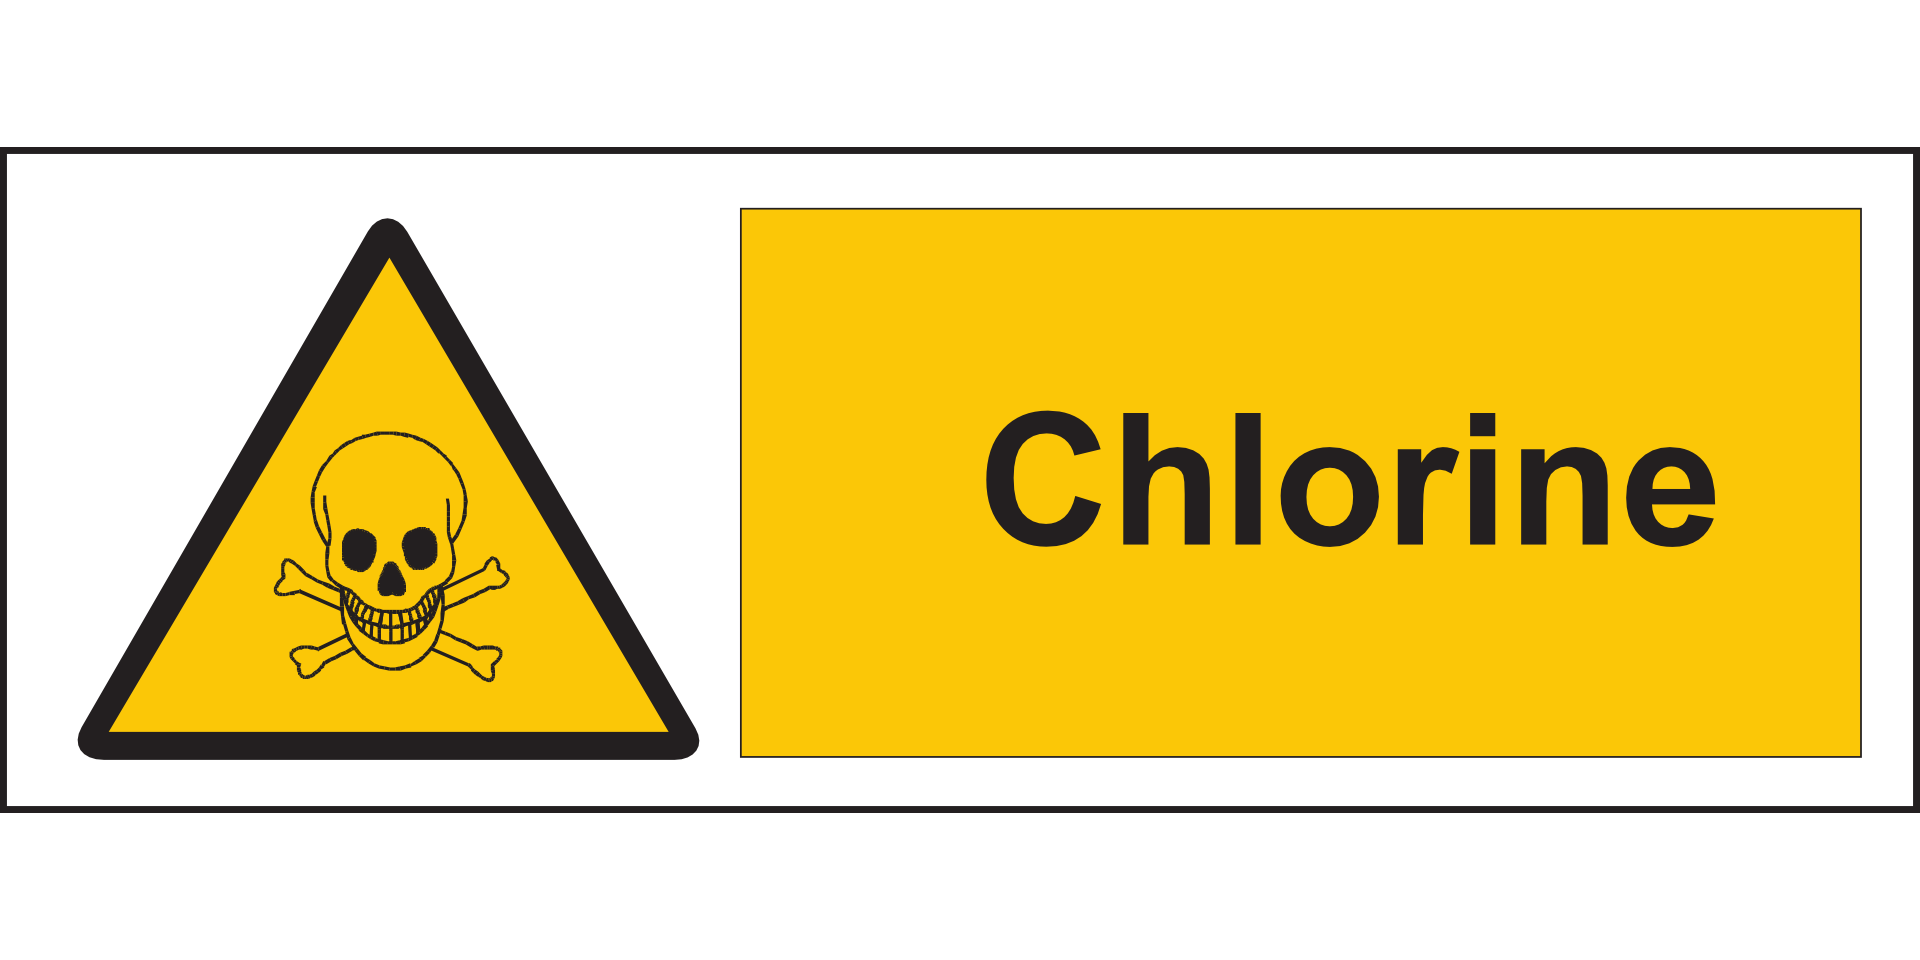 Chlorine in drinking water